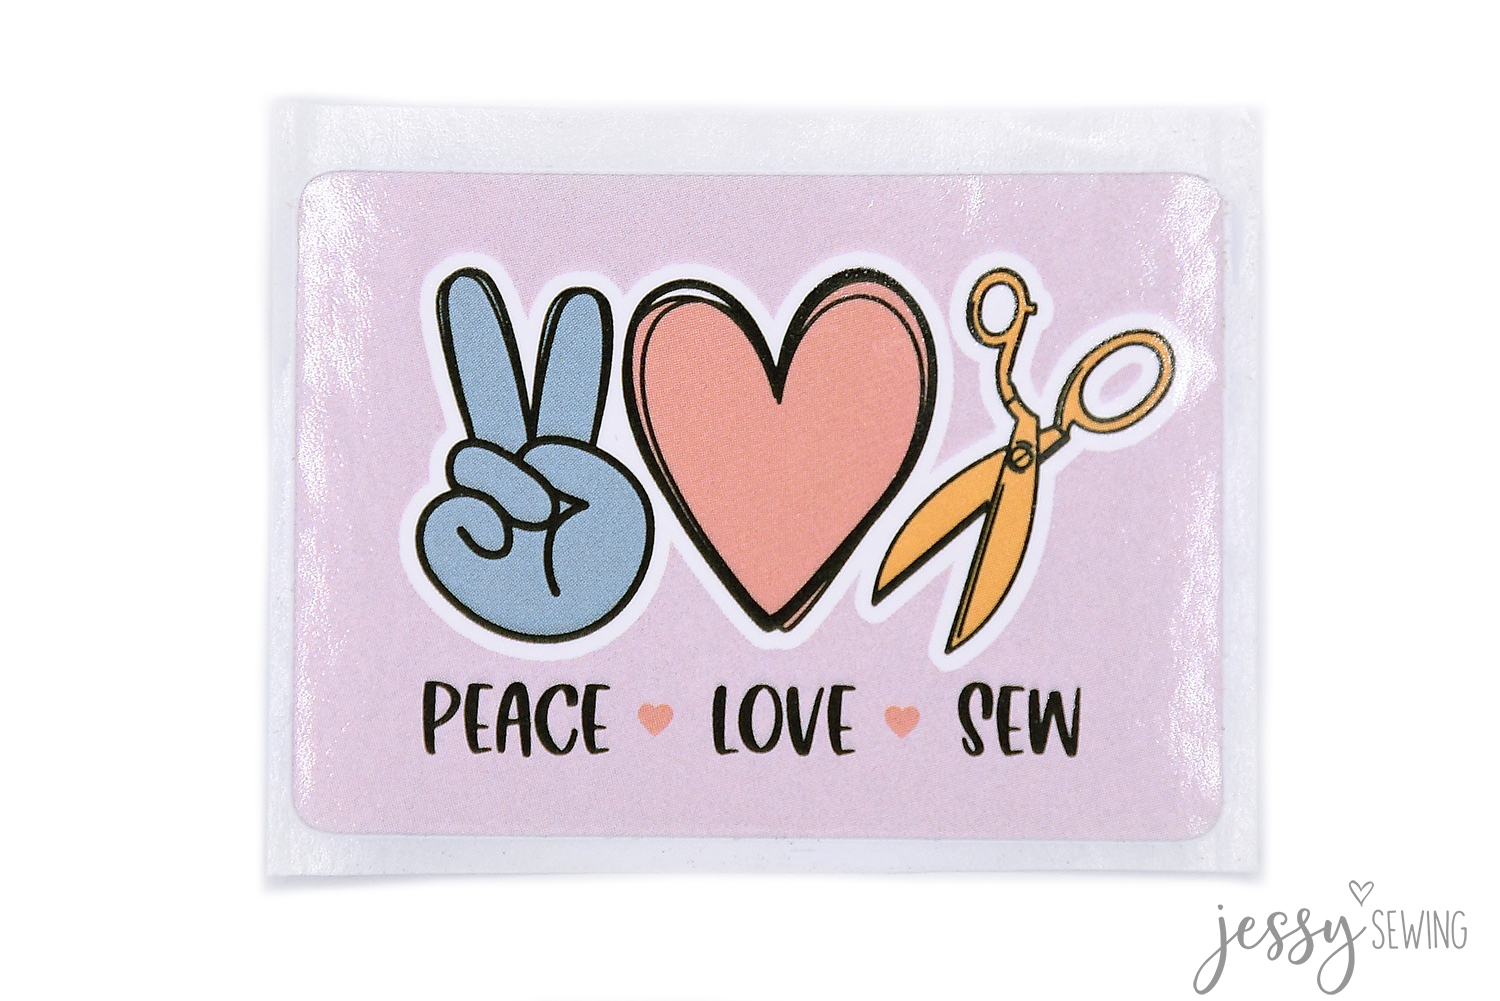 Sticker "peace love sew"